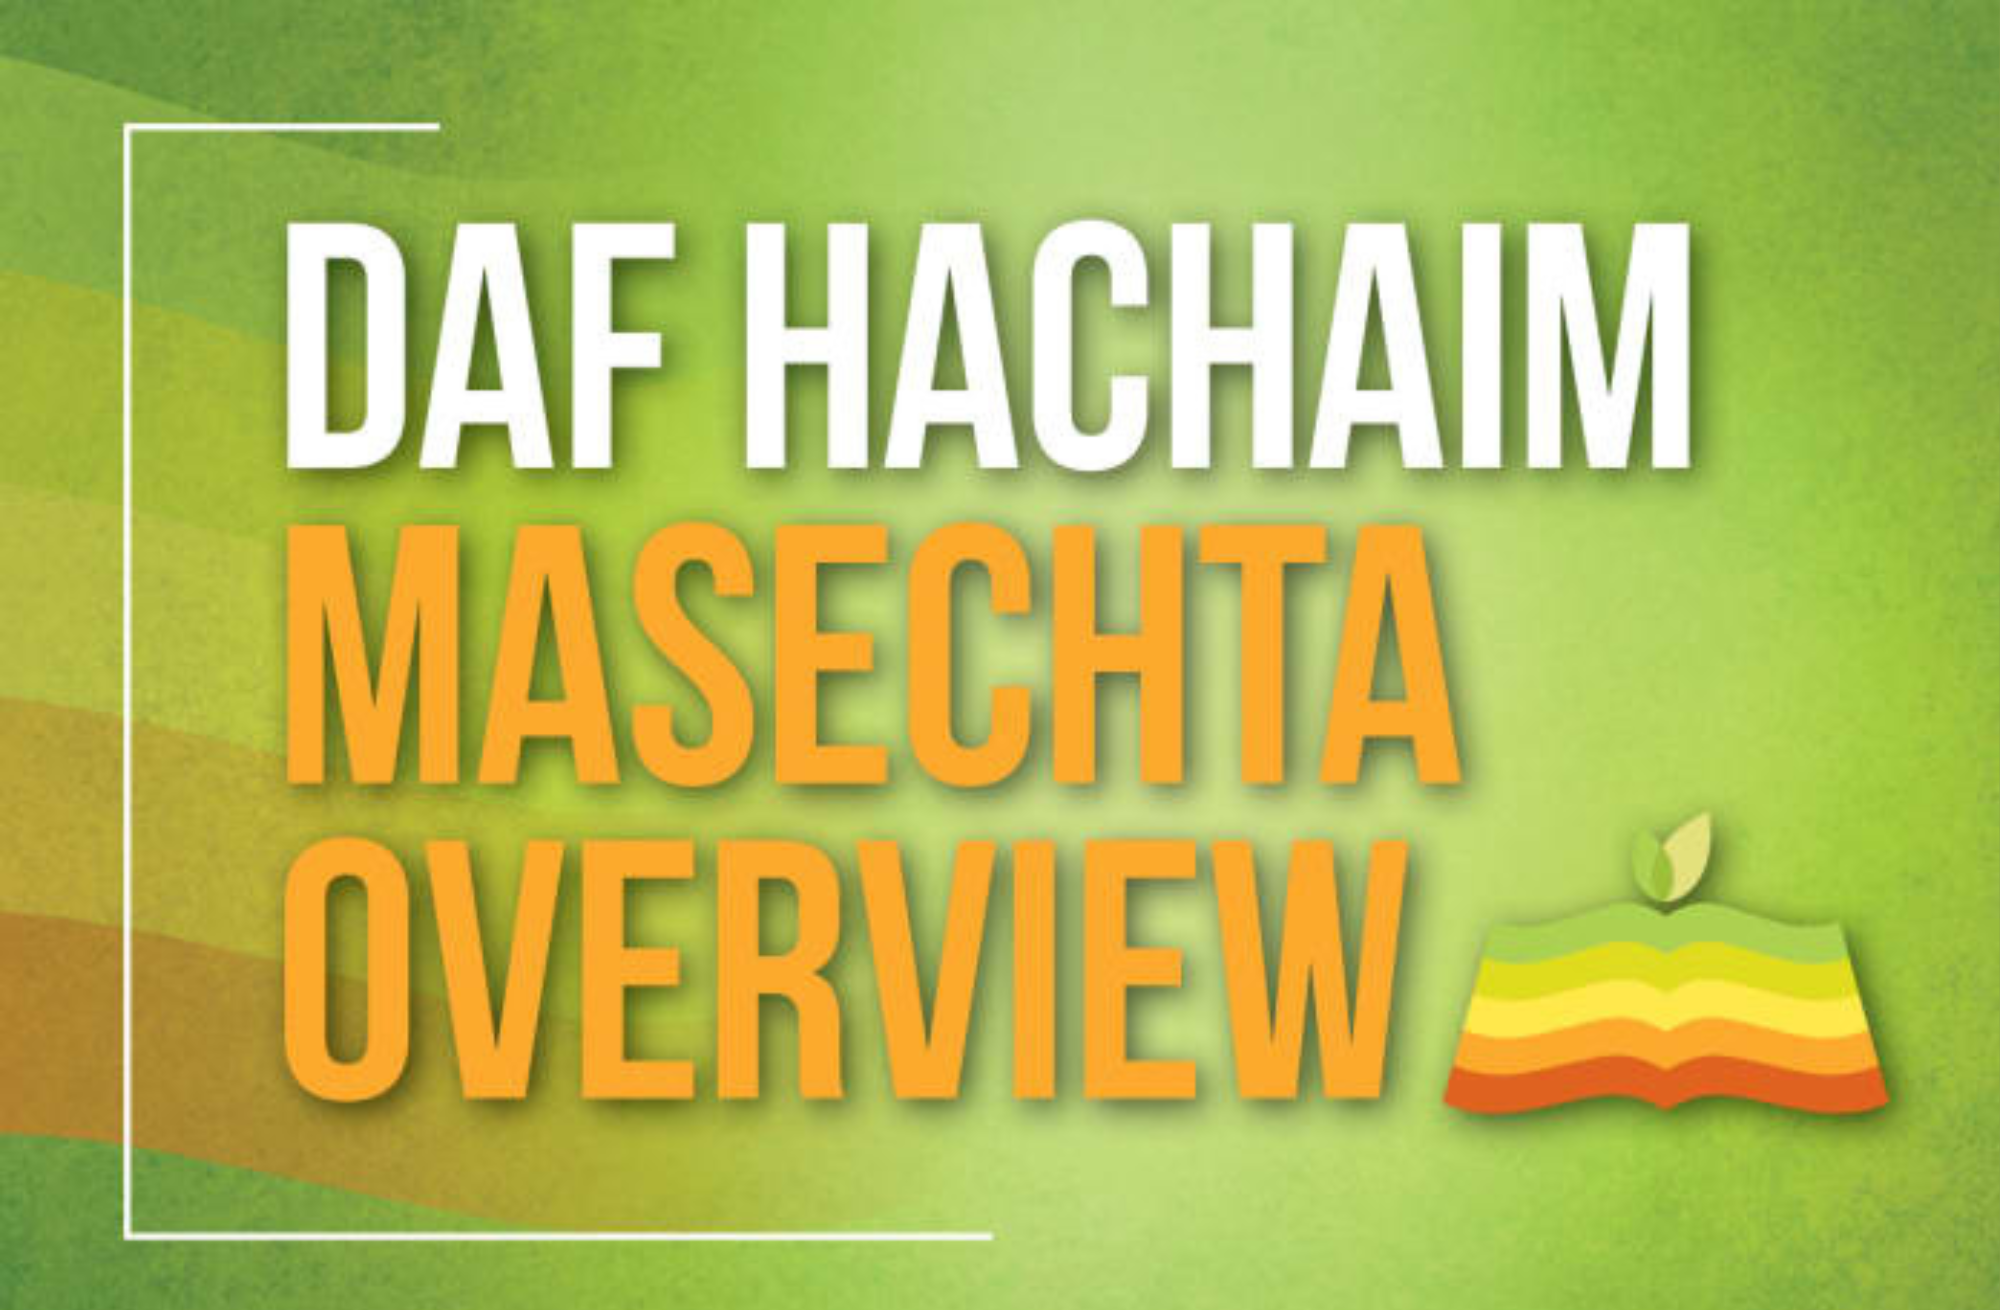 Daf Hachaim Mesechta Overview